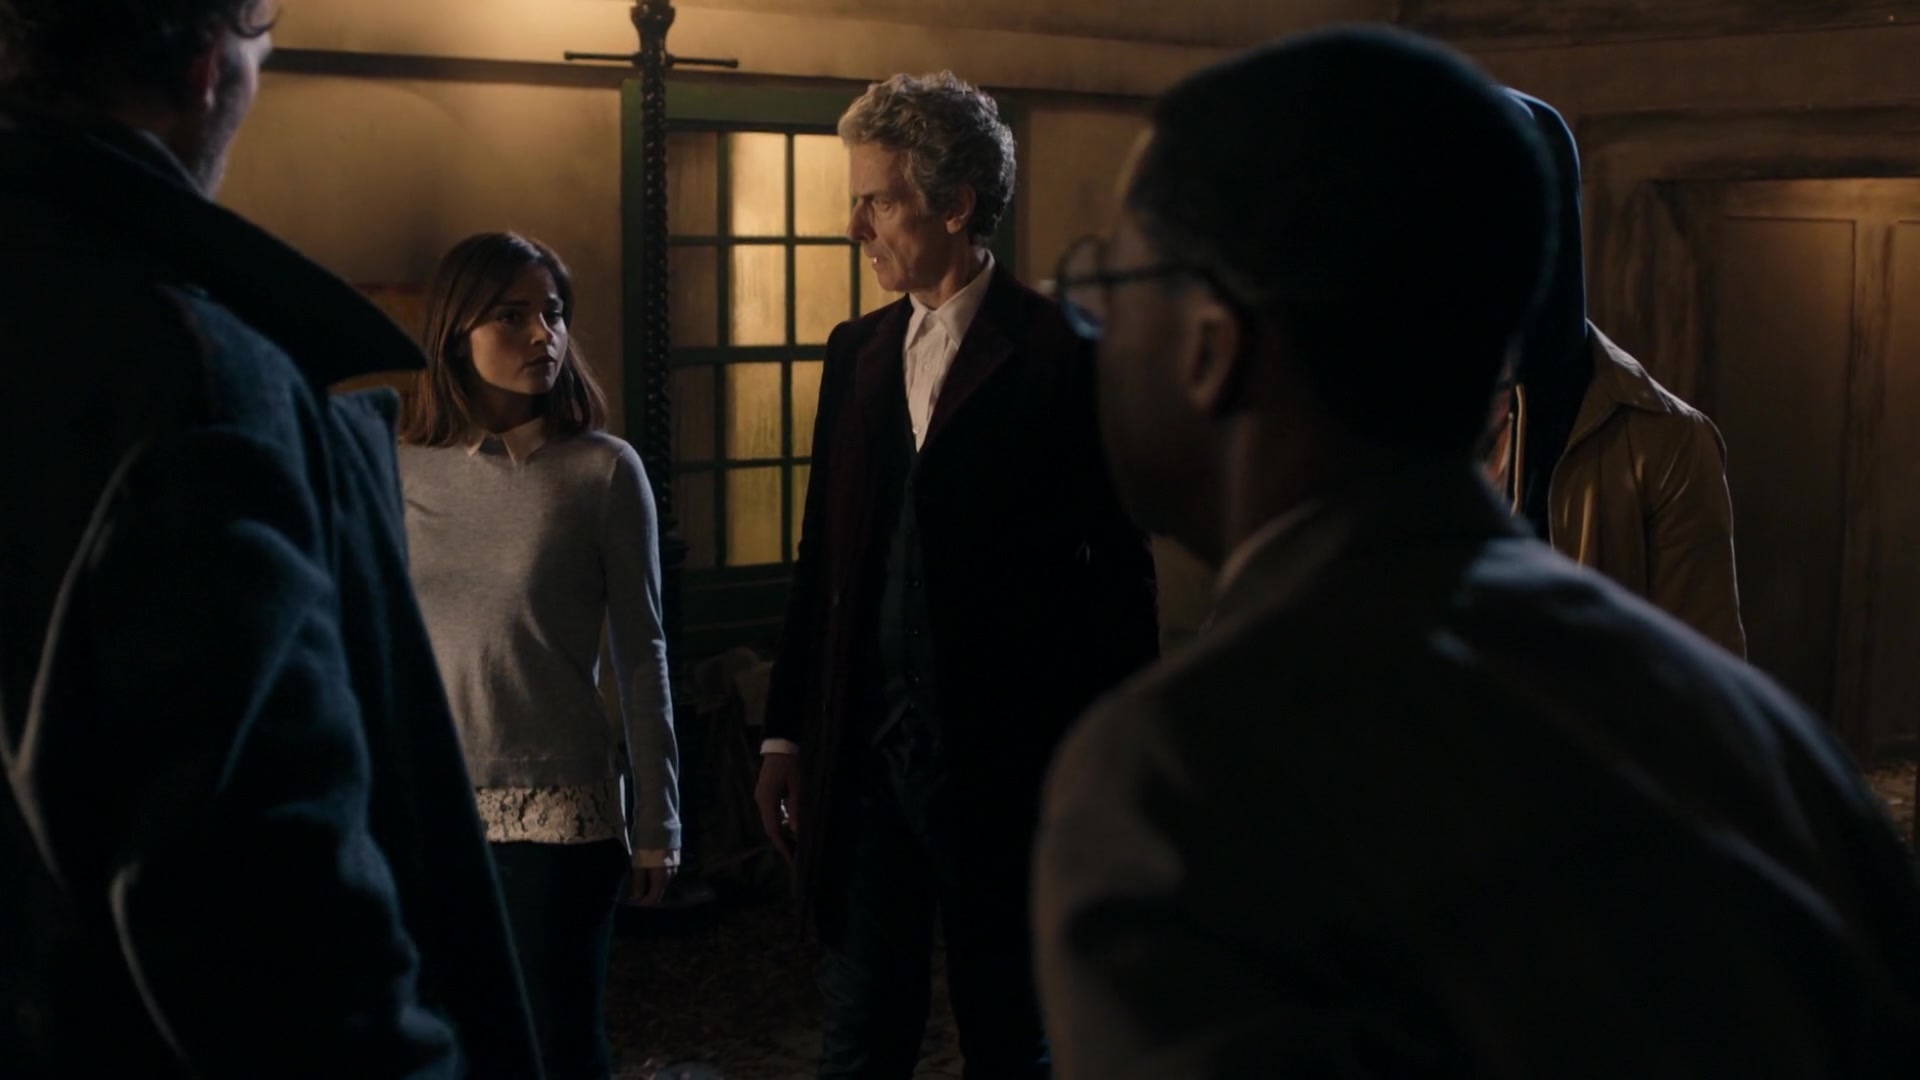 Doctor_Who_9x10-Sleep_No_More_0275.jpg